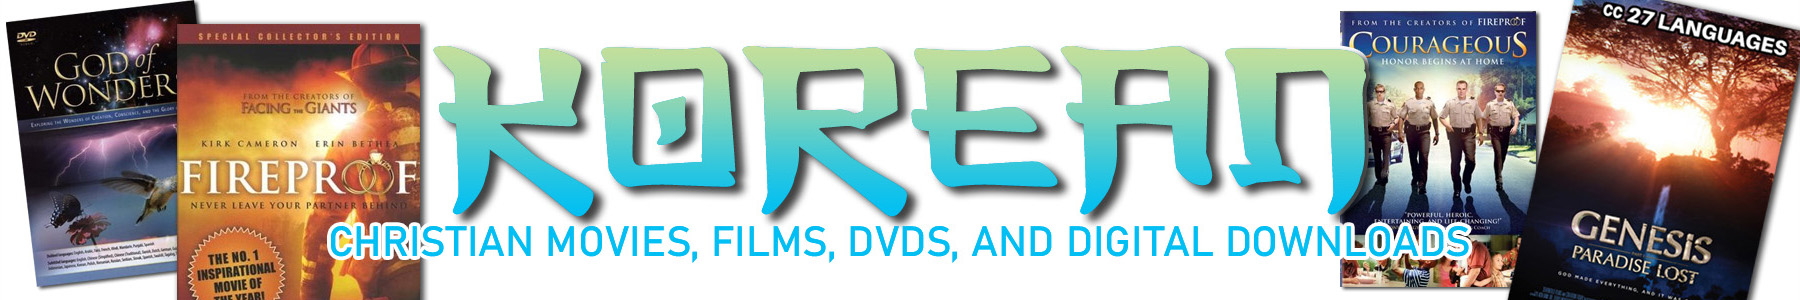 World Christian Video/DVD Directory